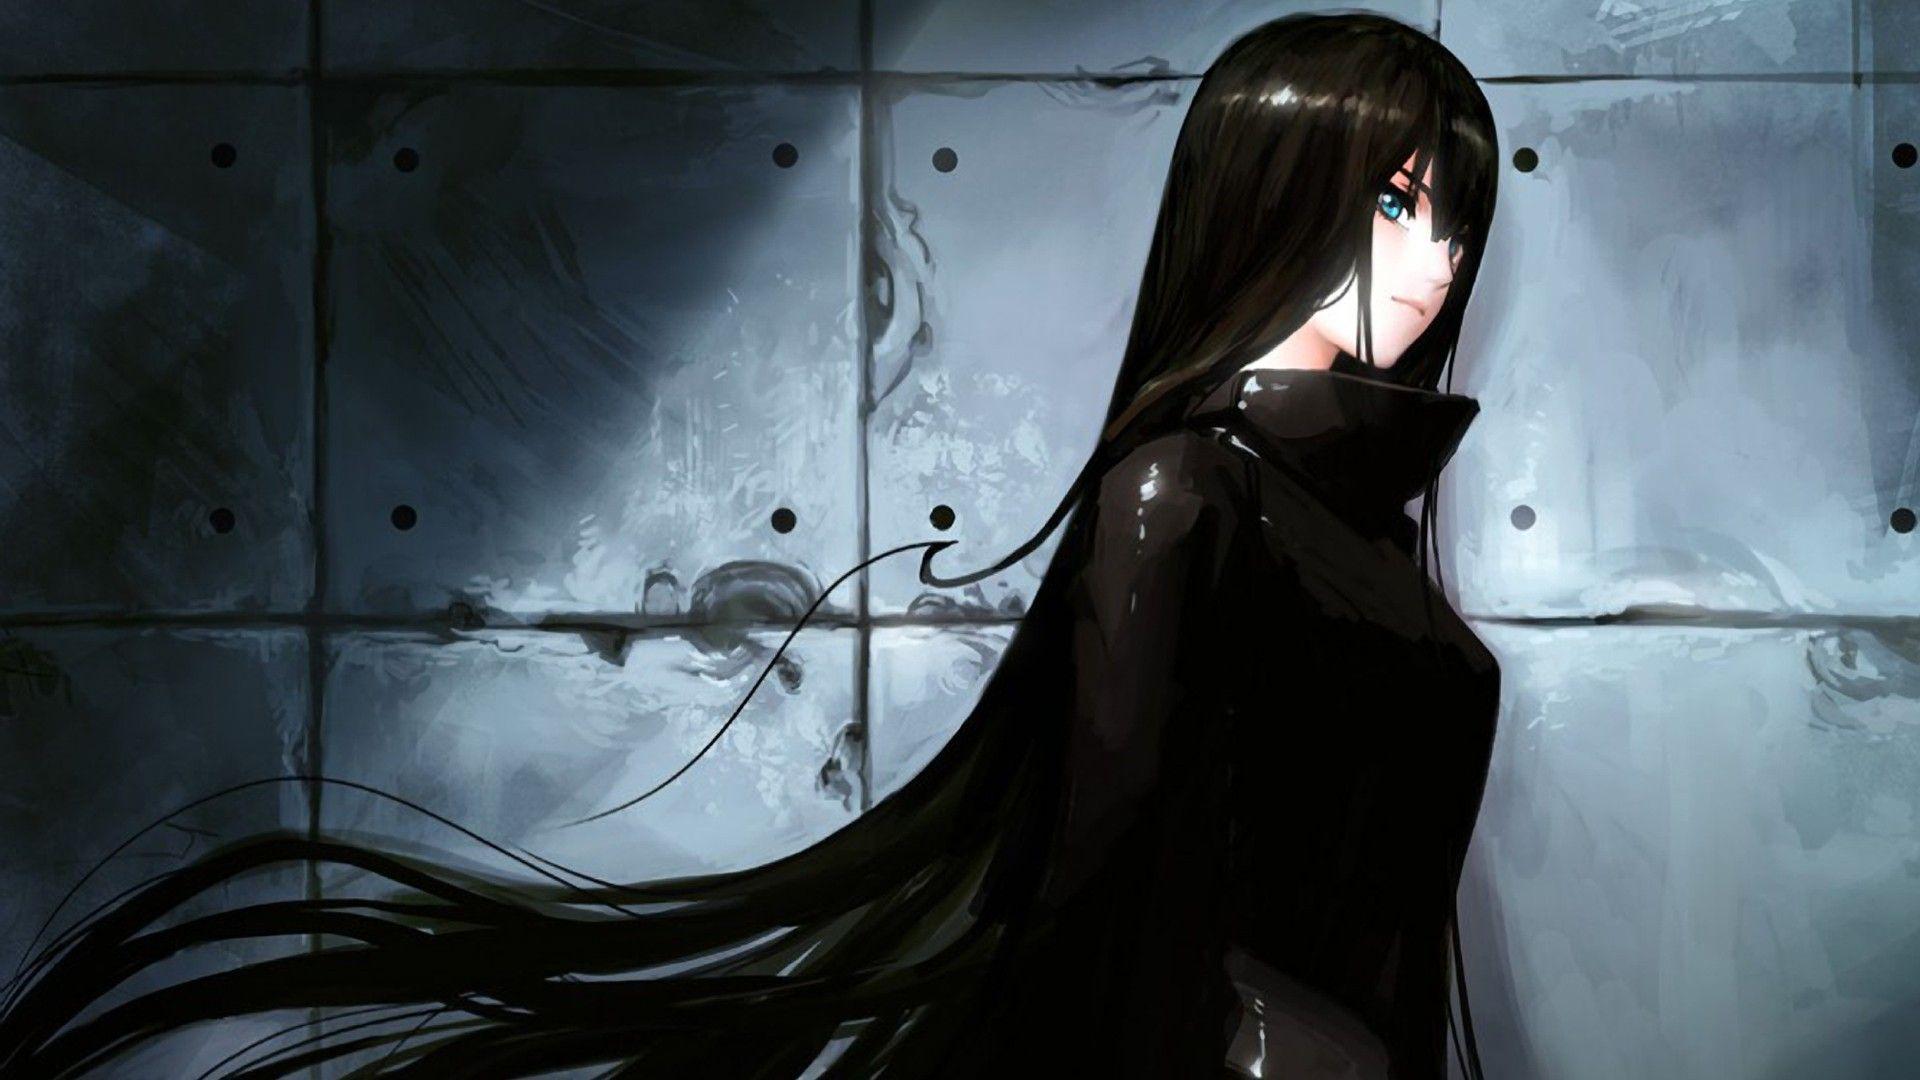 Anime Girl With Black Hair Wallpaper Free Anime Girl With Black Hair Background